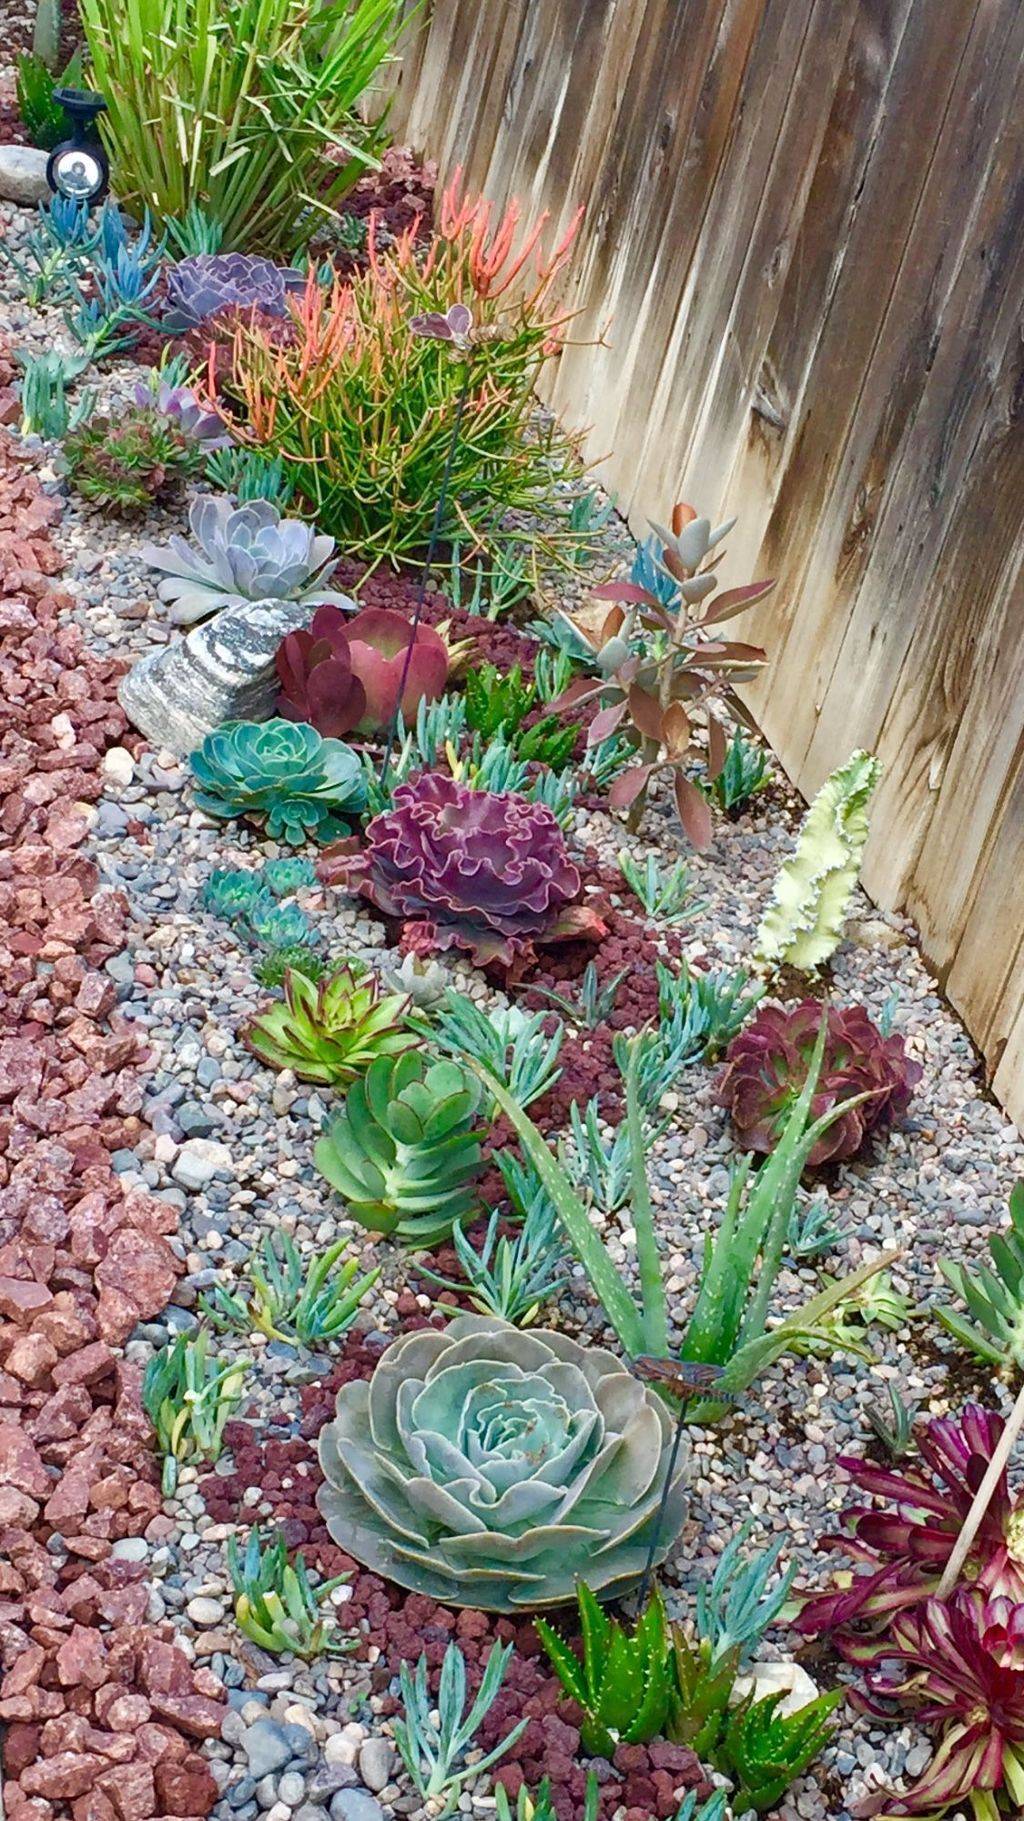 Beautiful Cactus Landscaping Ideas